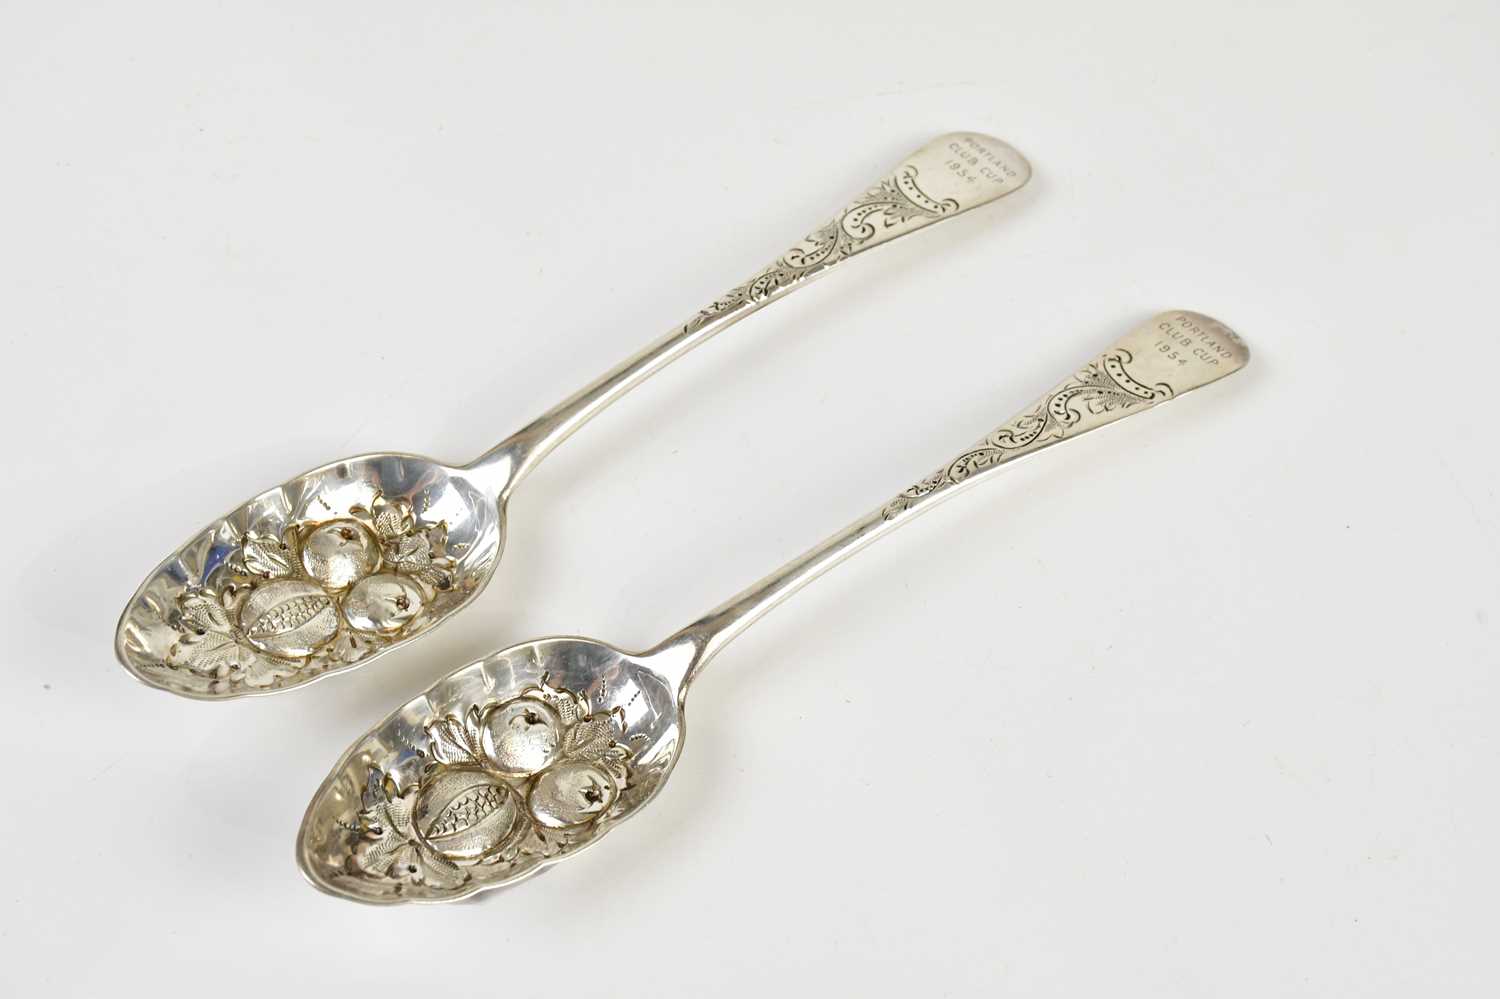 WILLIAM DAVIE; a pair of George III hallmarked silver berry spoons, Edinburgh 1783 (probably),